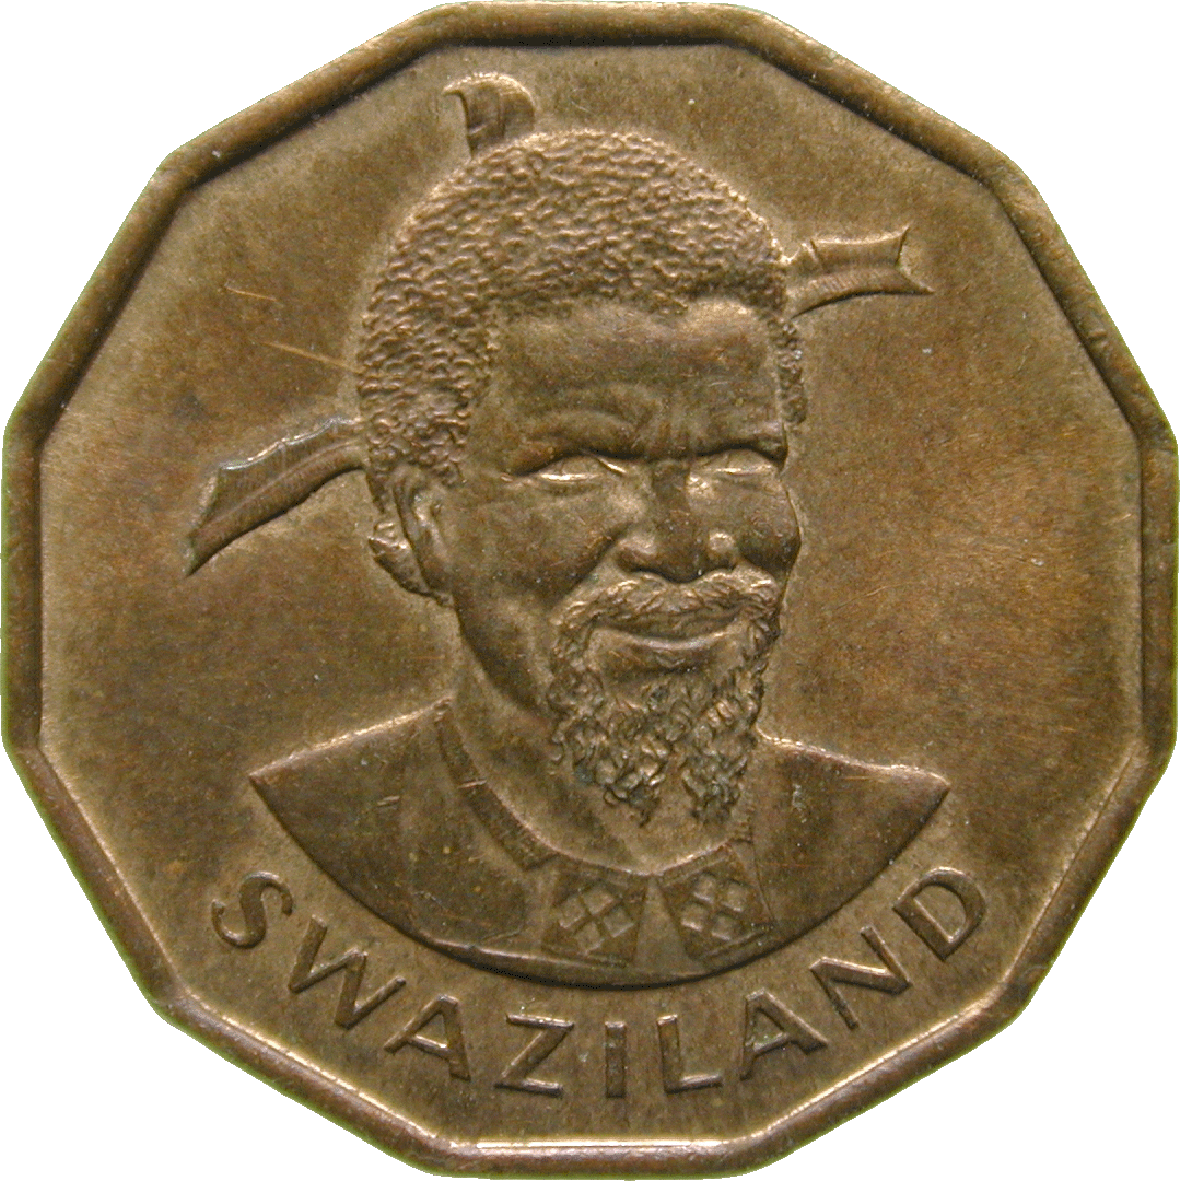 Königreich Swasiland, Sobhuza II., 1 Cent 1974 (obverse)